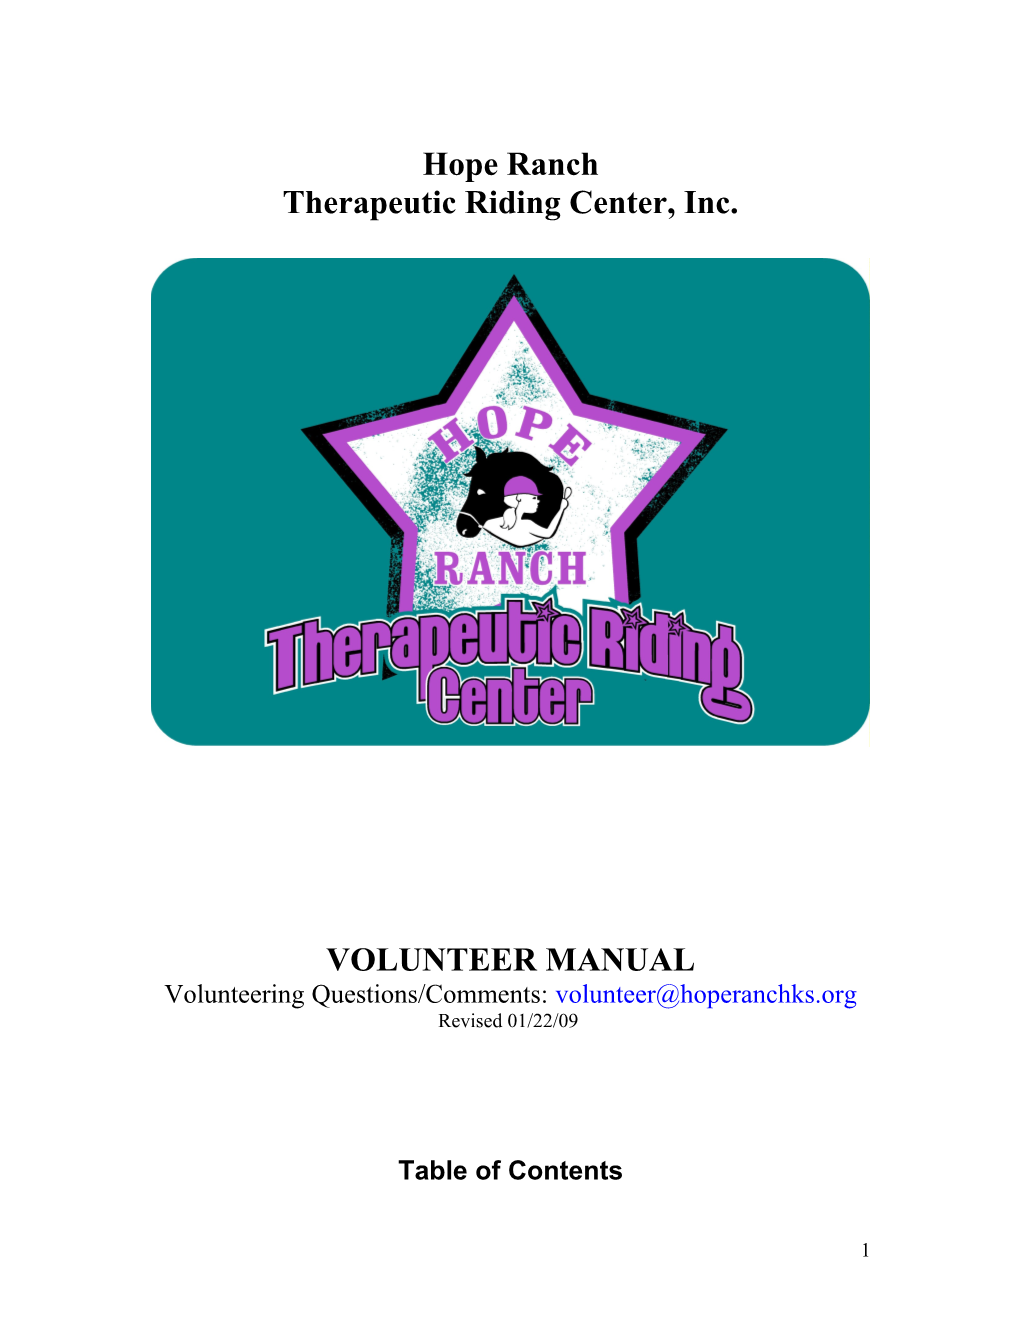 Therapeutic Riding Center, Inc